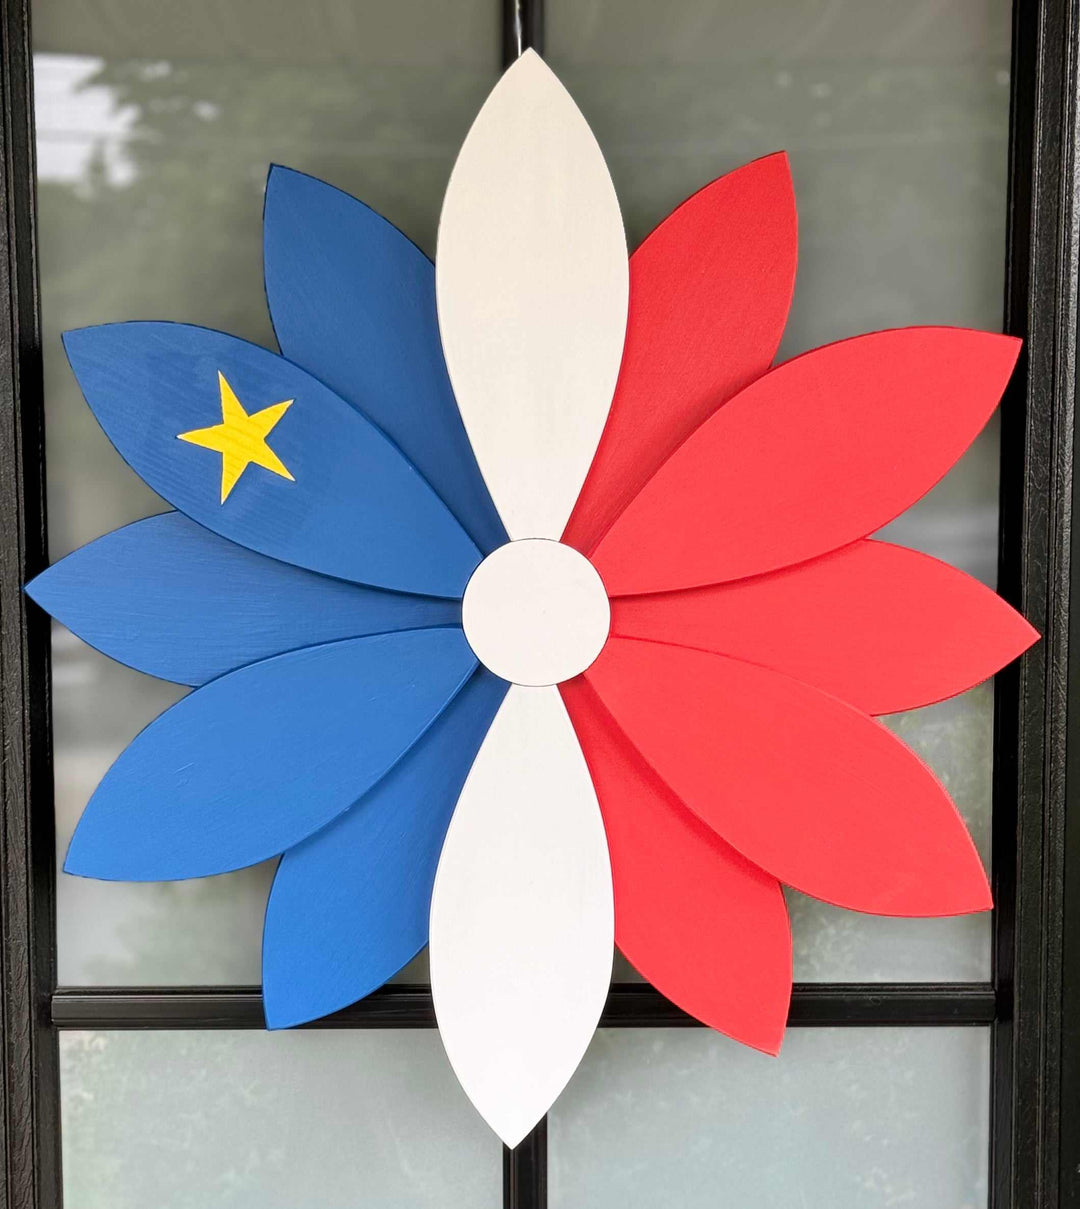  24-inch flower design from the Acadian flag, celebrating Acadian heritage